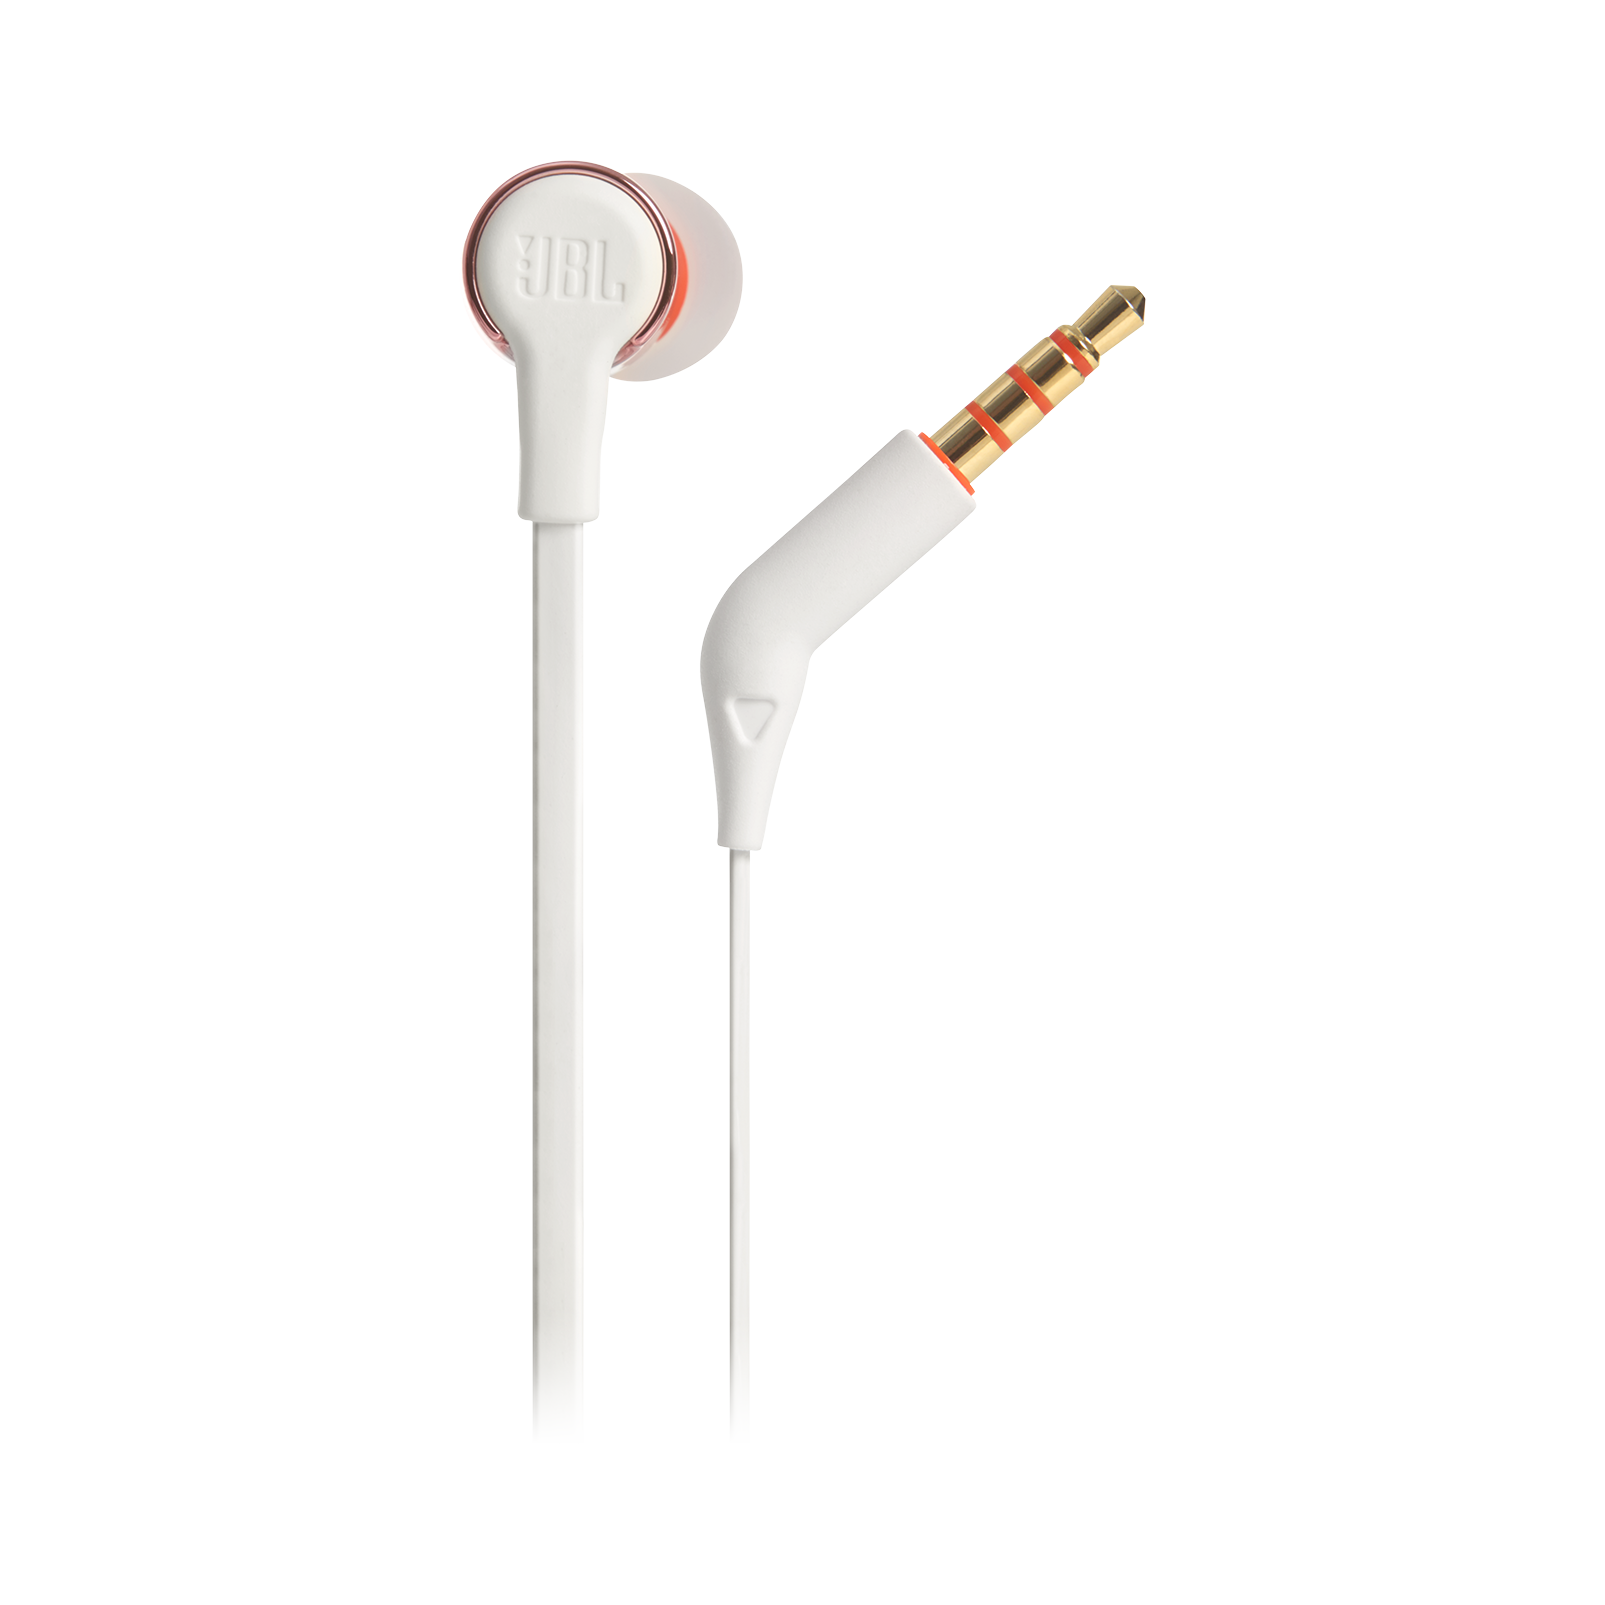 JBL Tune 210 - Rose Gold - In-ear headphones - Detailshot 2